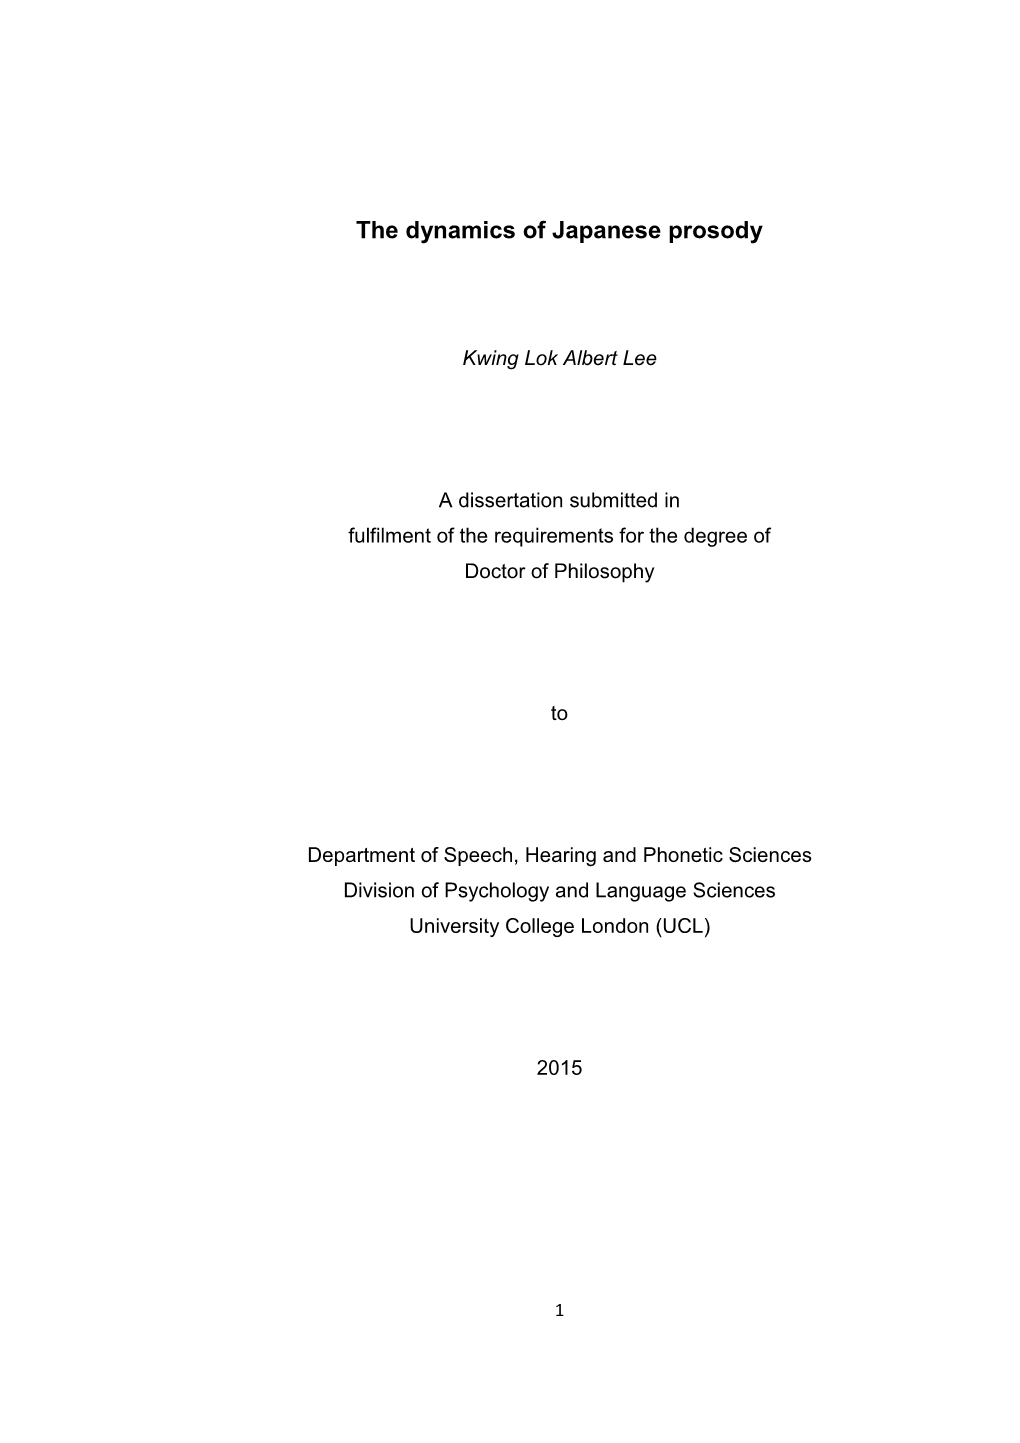 The Dynamics of Japanese Prosody